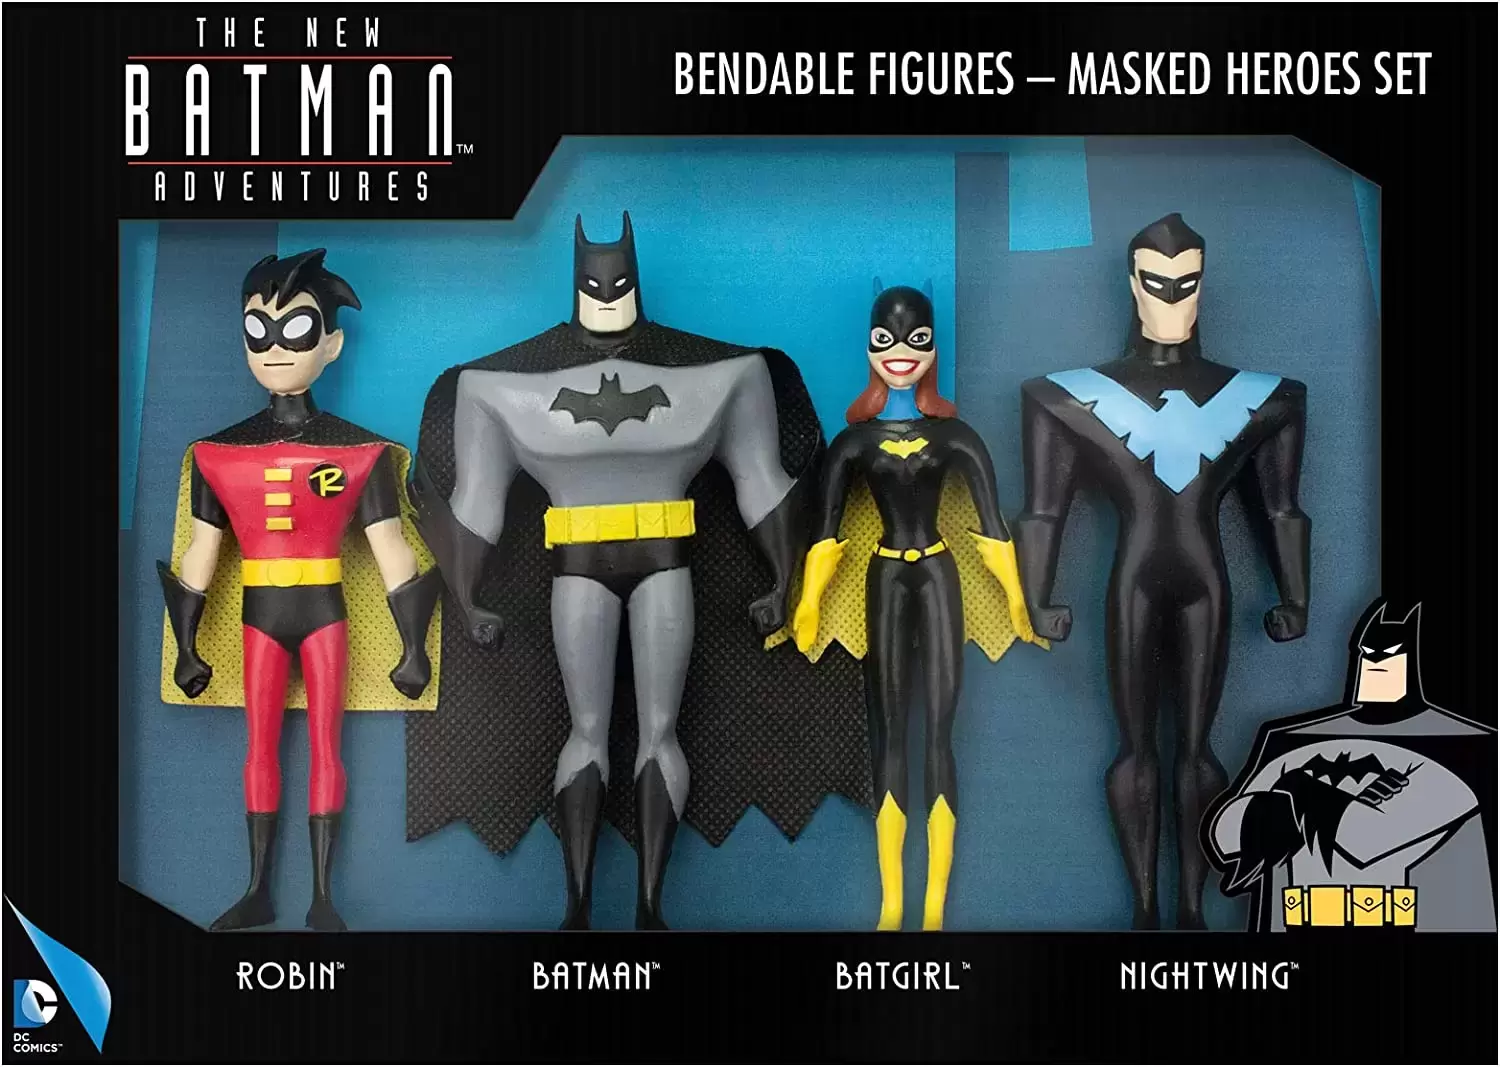 The New Batman Adventures - The New Batman Adventures - Bendable Figures Masked Heroes Set